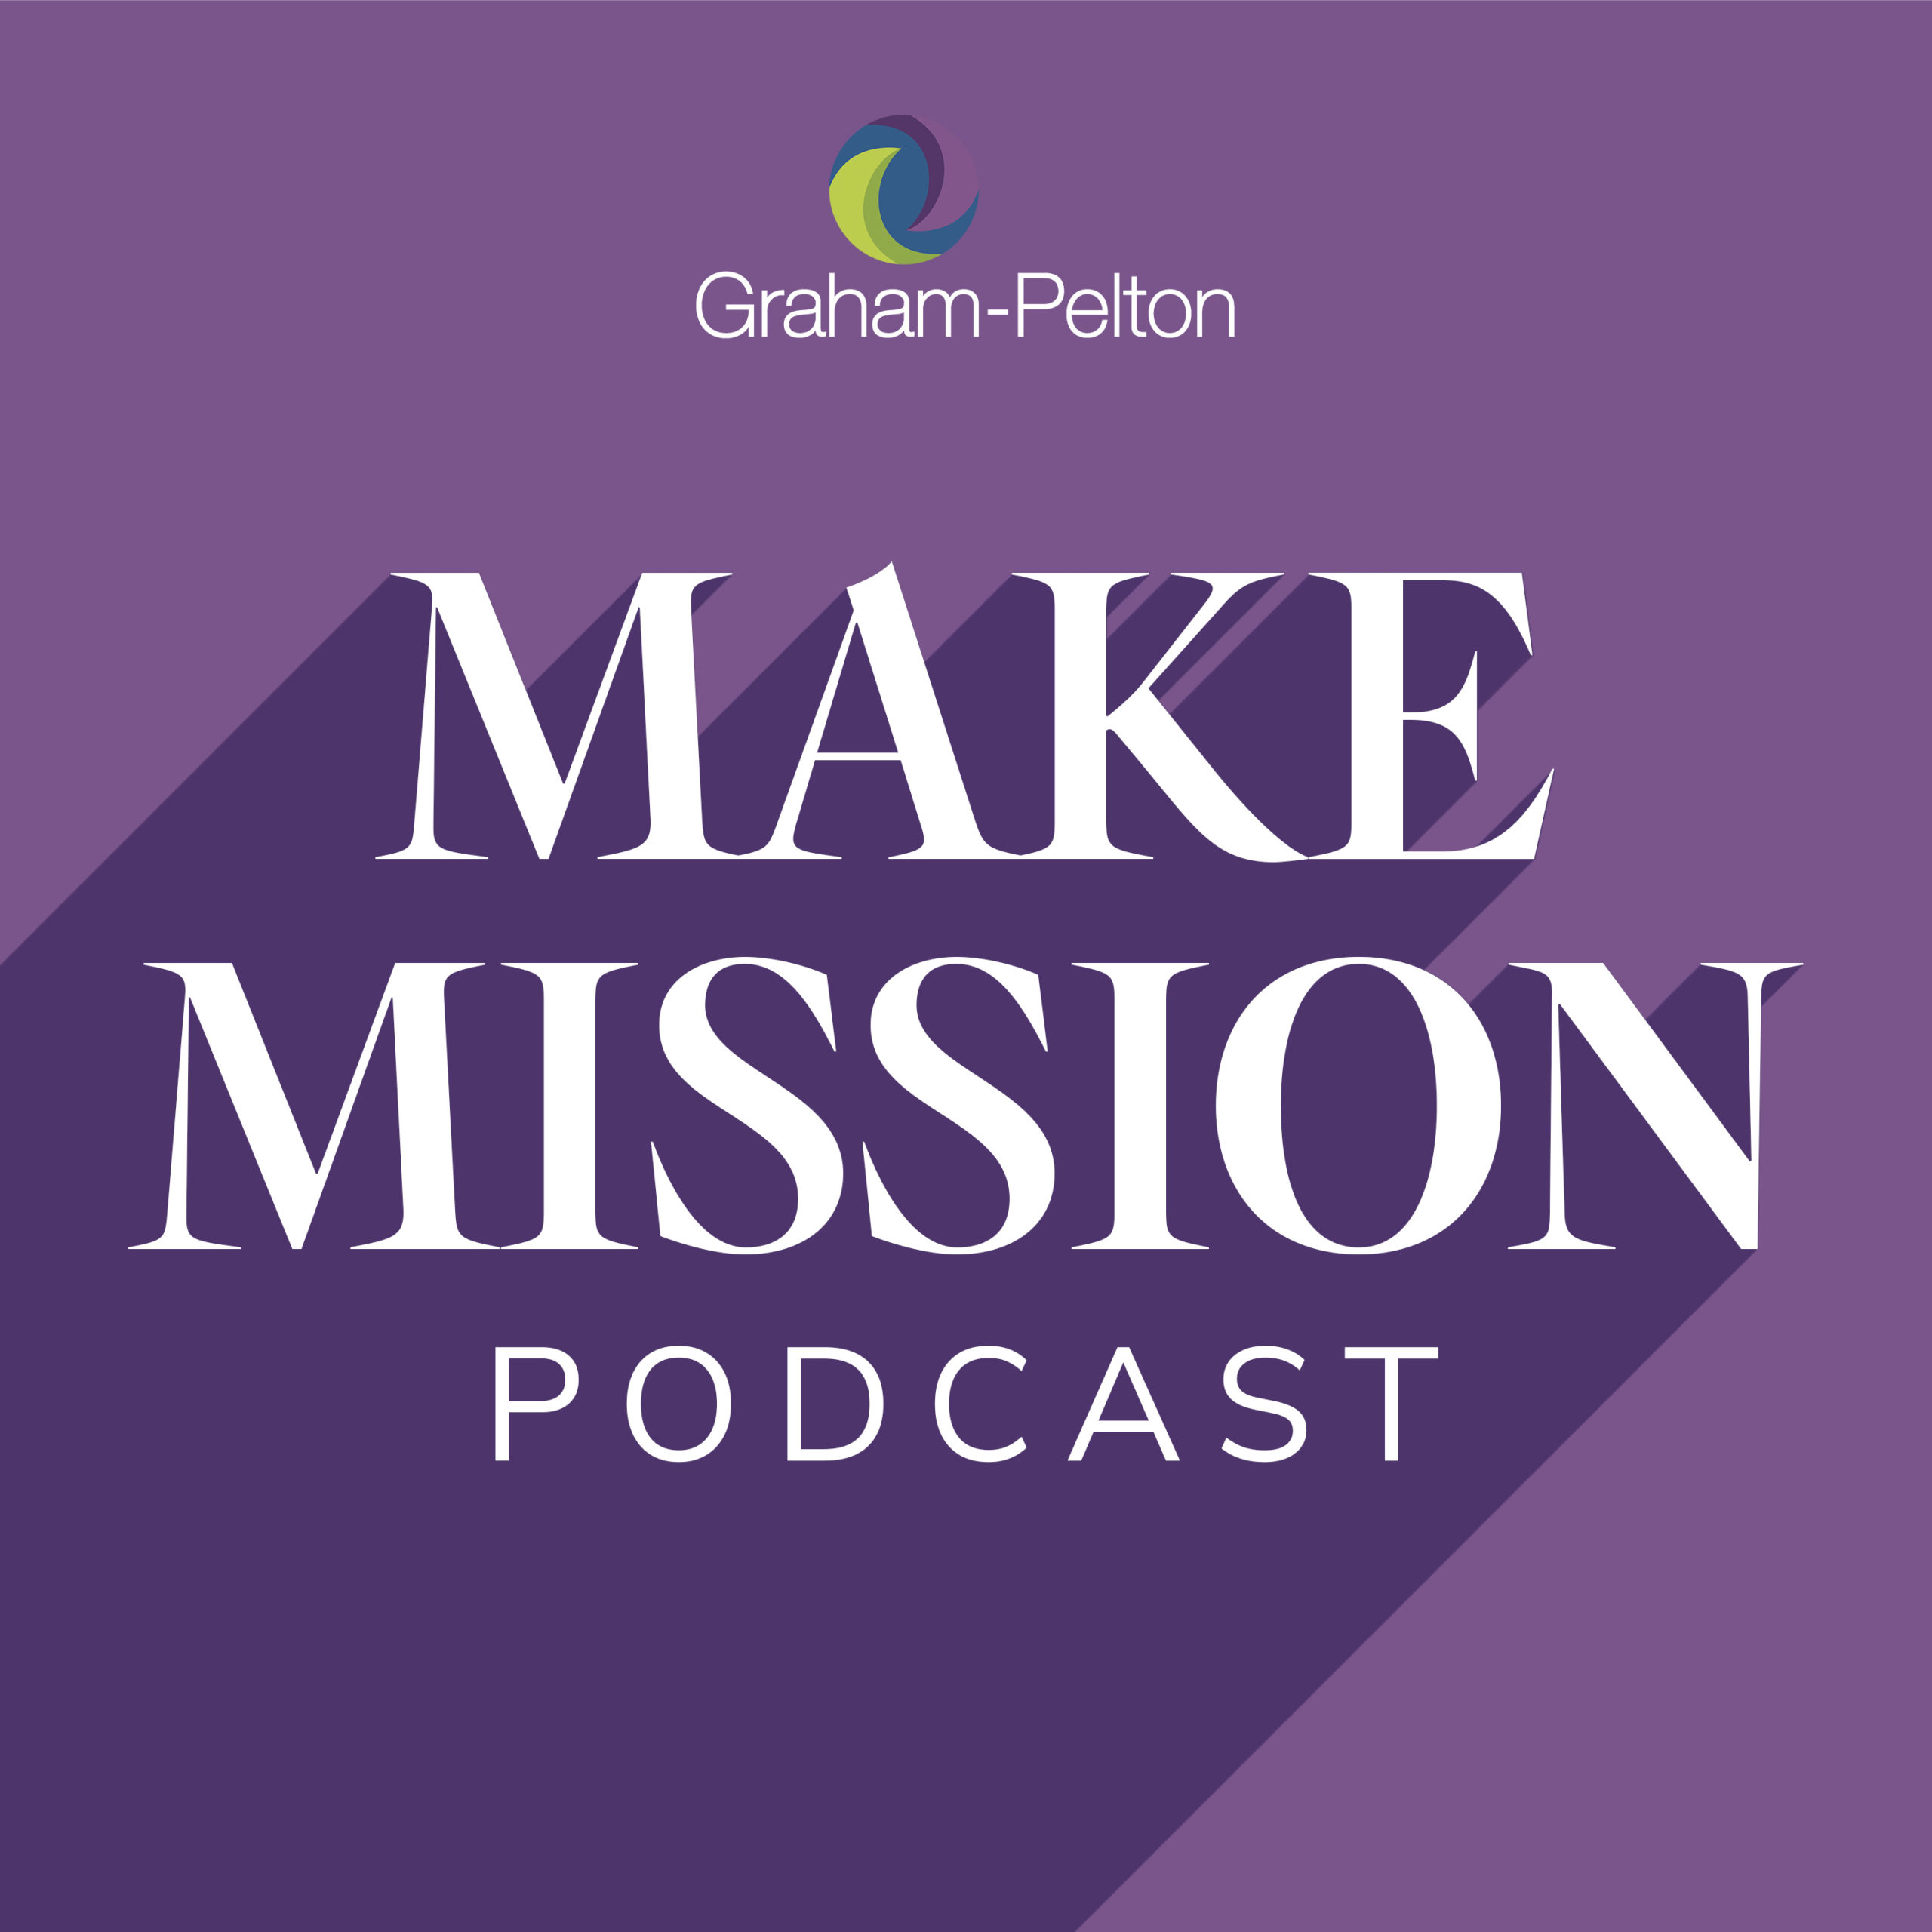 Make Mission podcast cover art